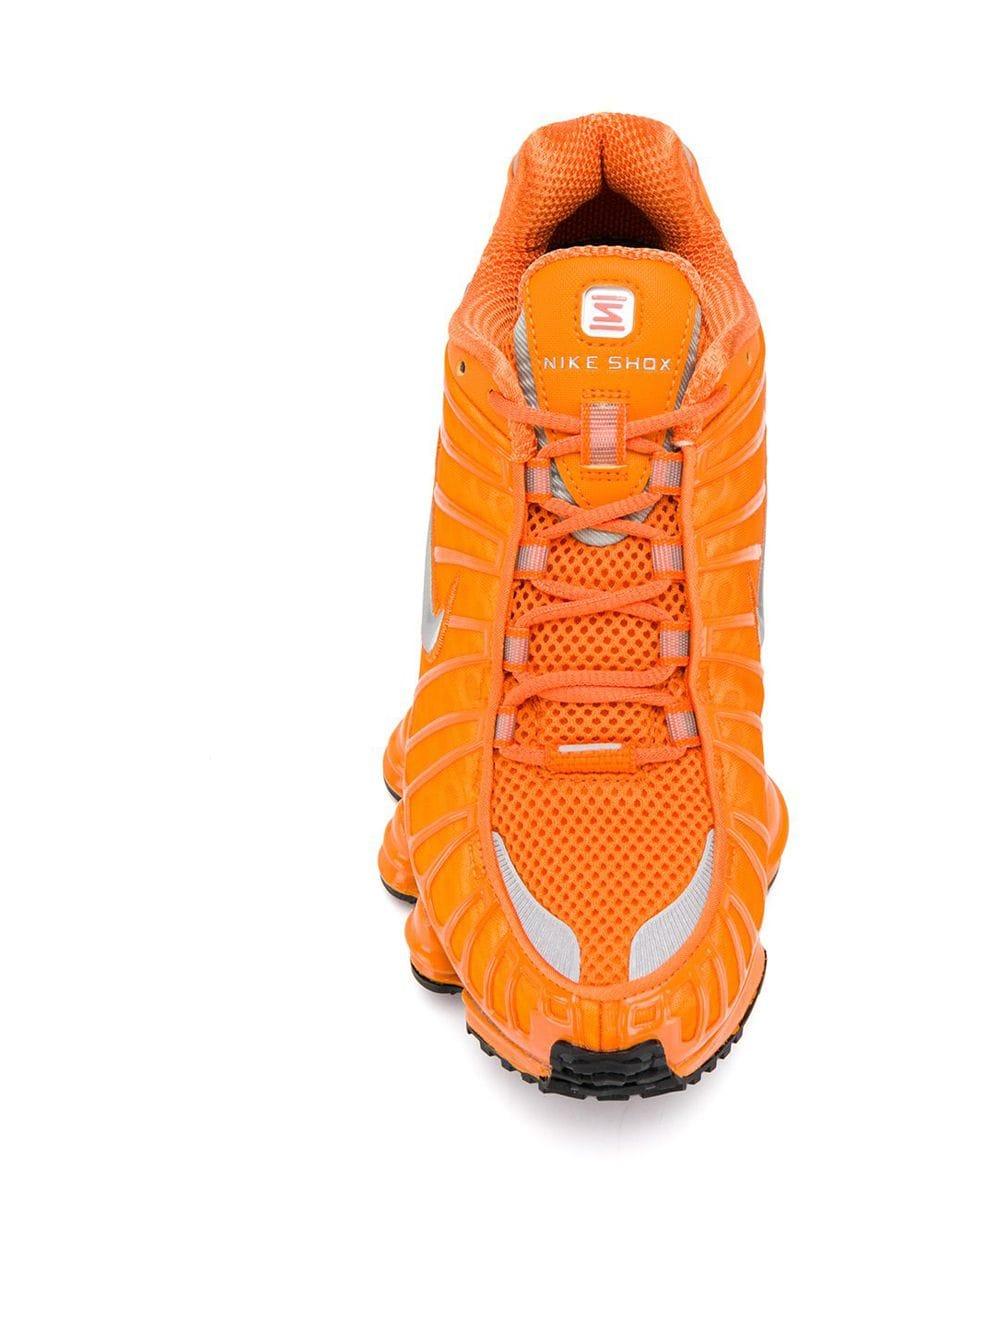 Zapatillas Shox TL Nike de hombre color Naranja |